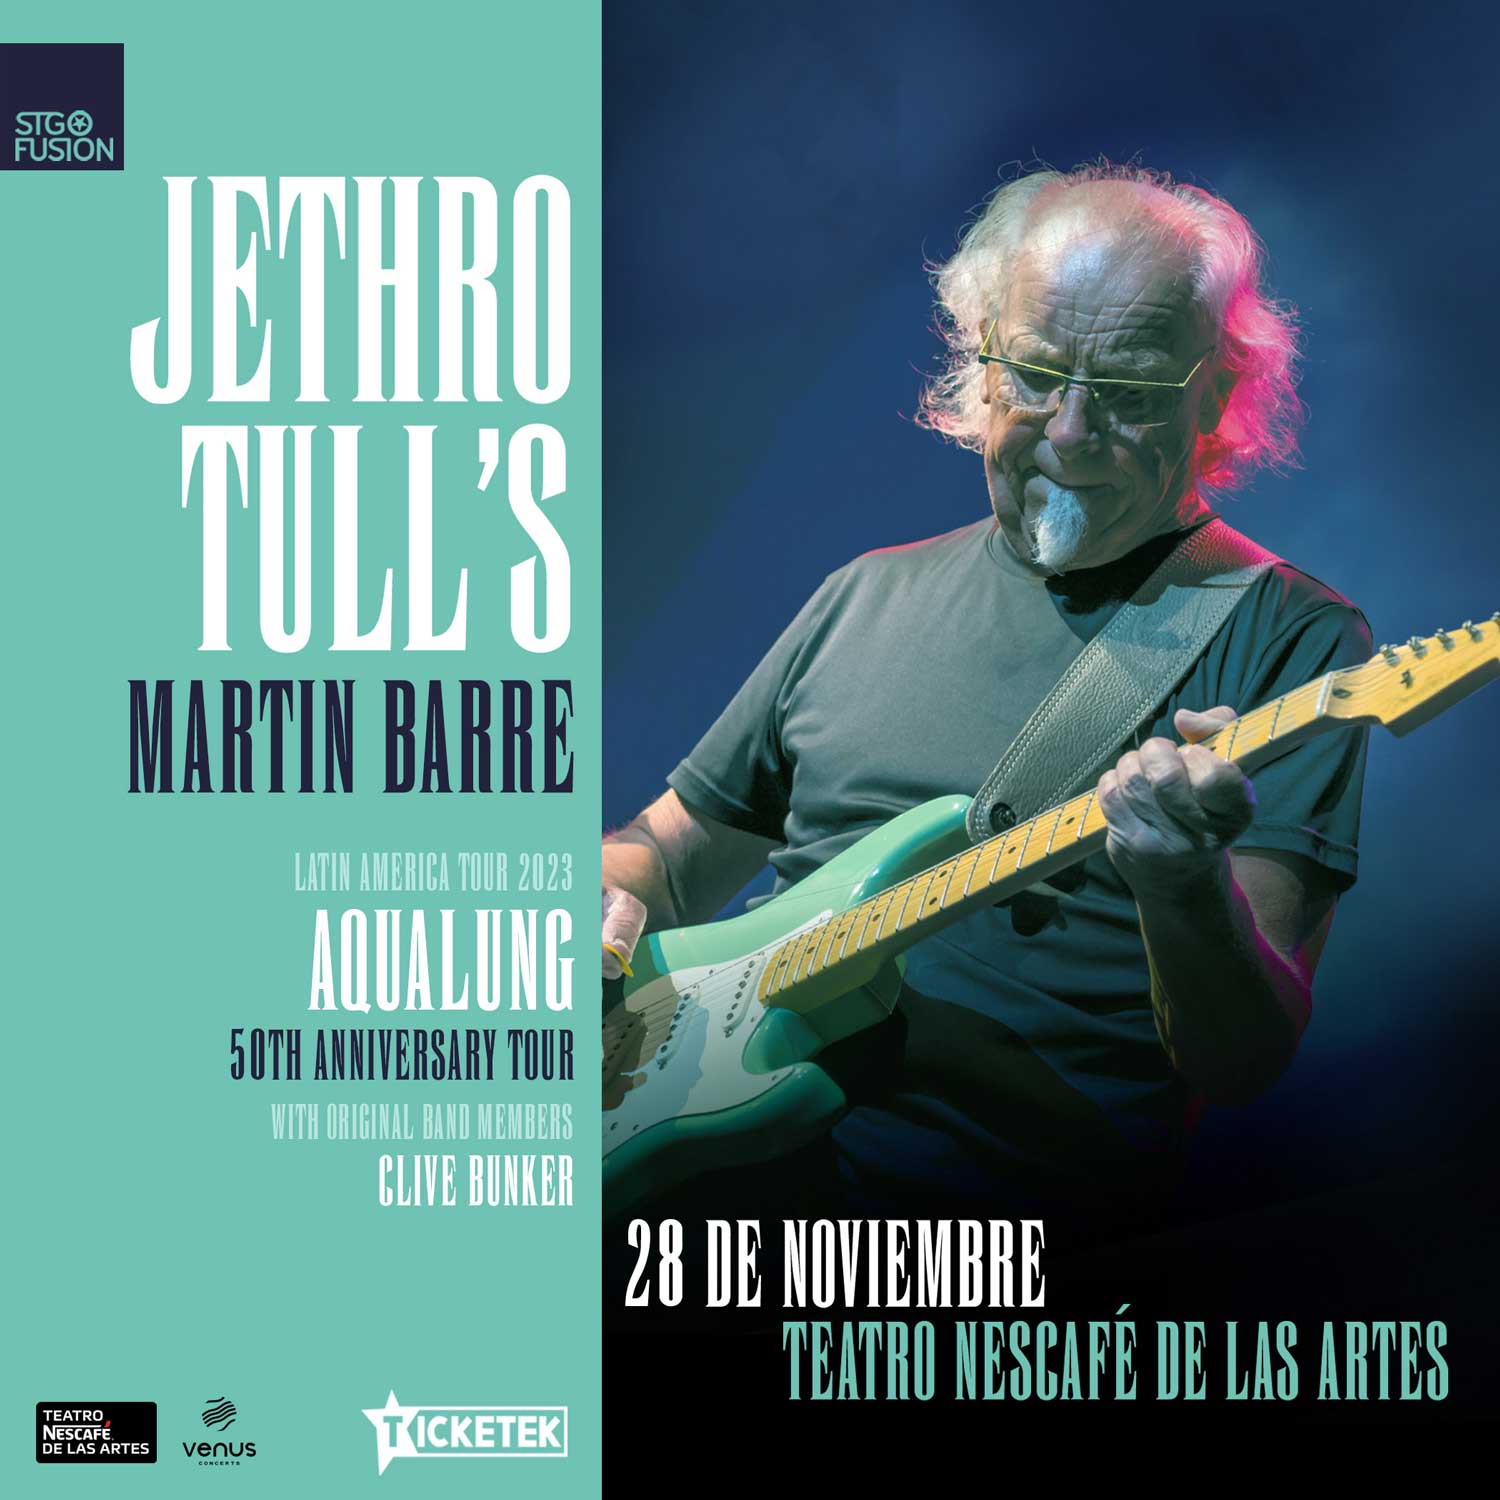 Martin Barre reprograma su show en Chile setlist.cl